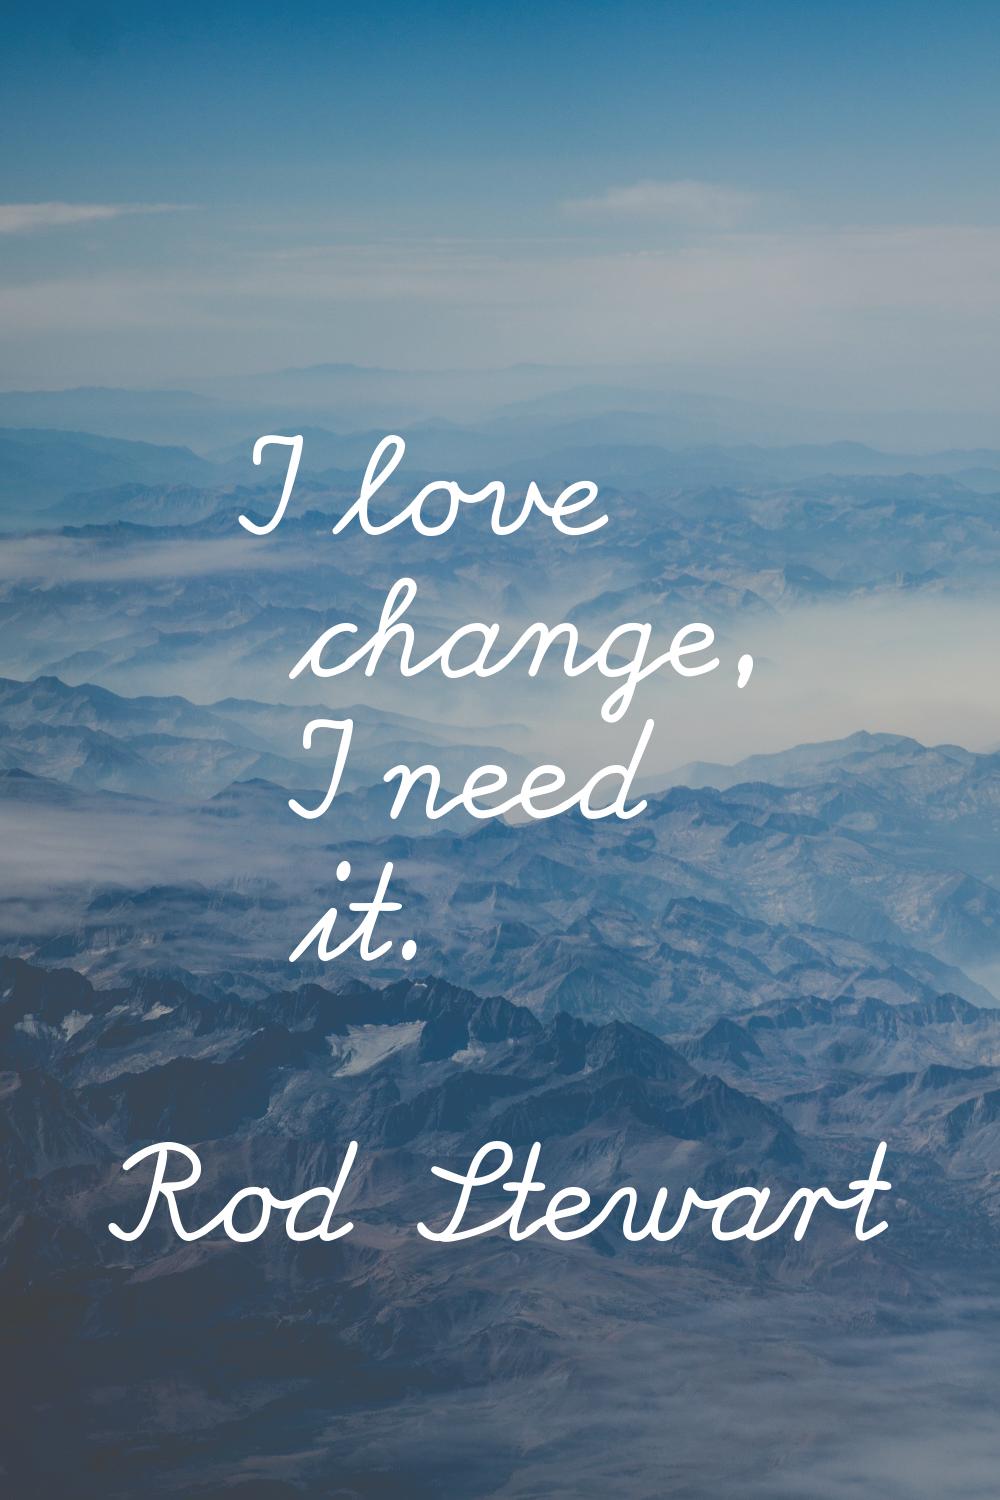 I love change, I need it.